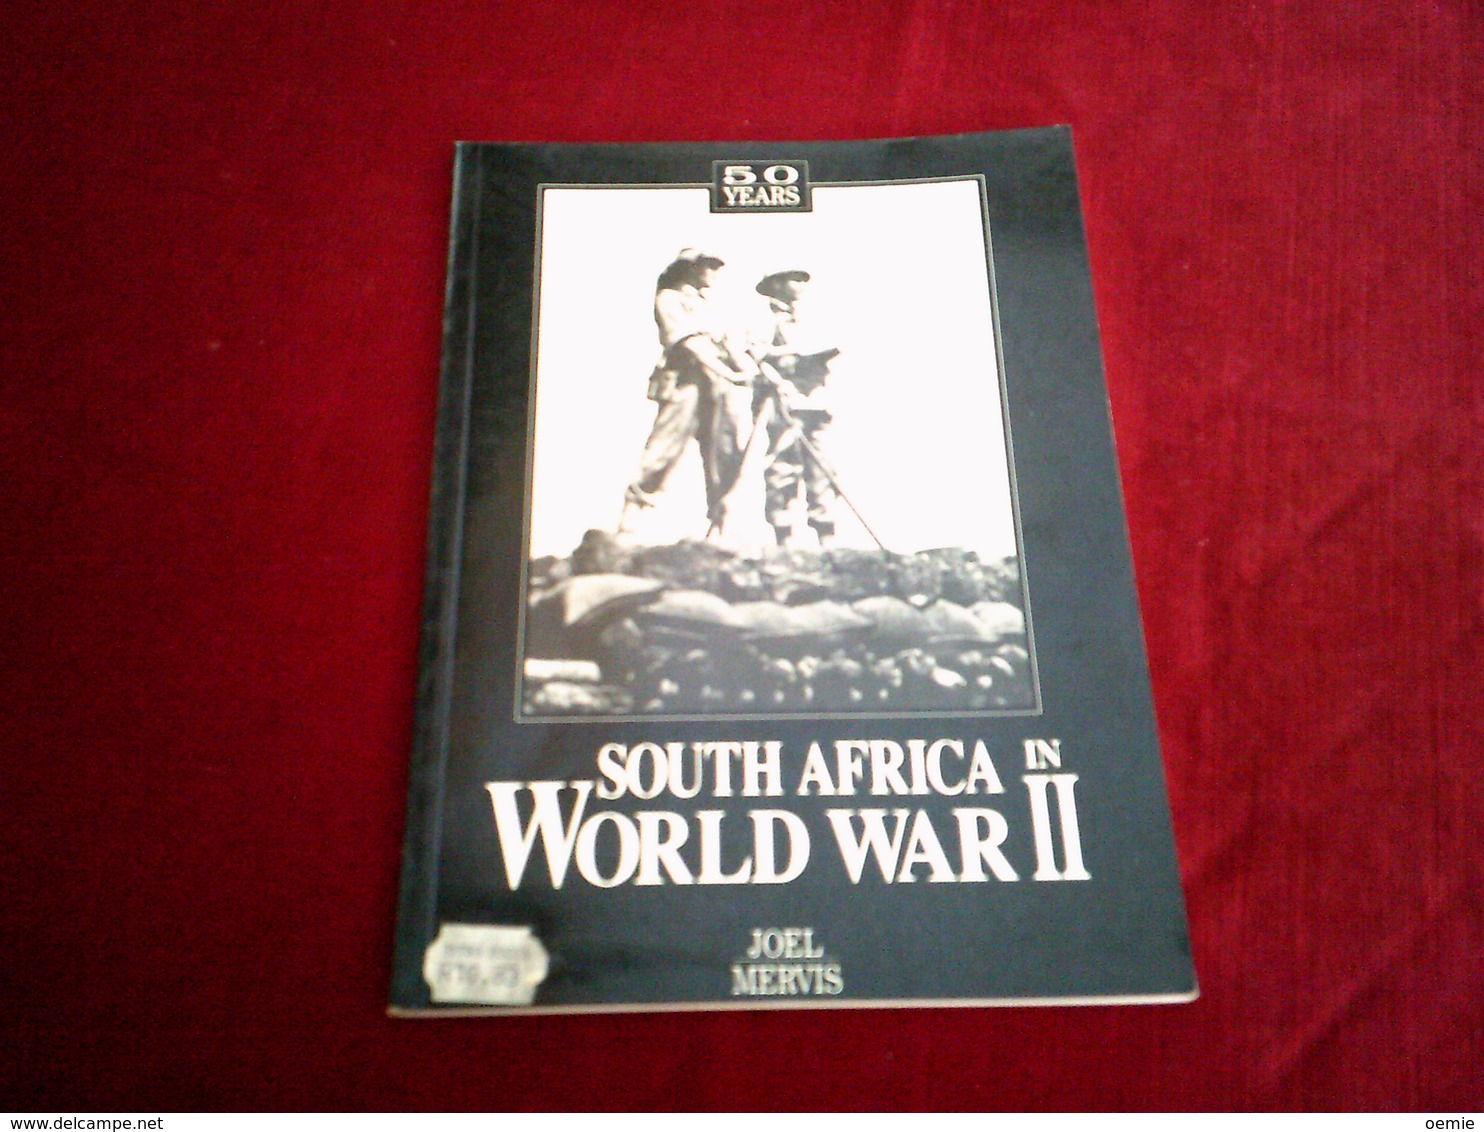 50 YEARS SOUTH AFRICA IN WORLD WAR II  PAR JOEL MERVIS - US Army